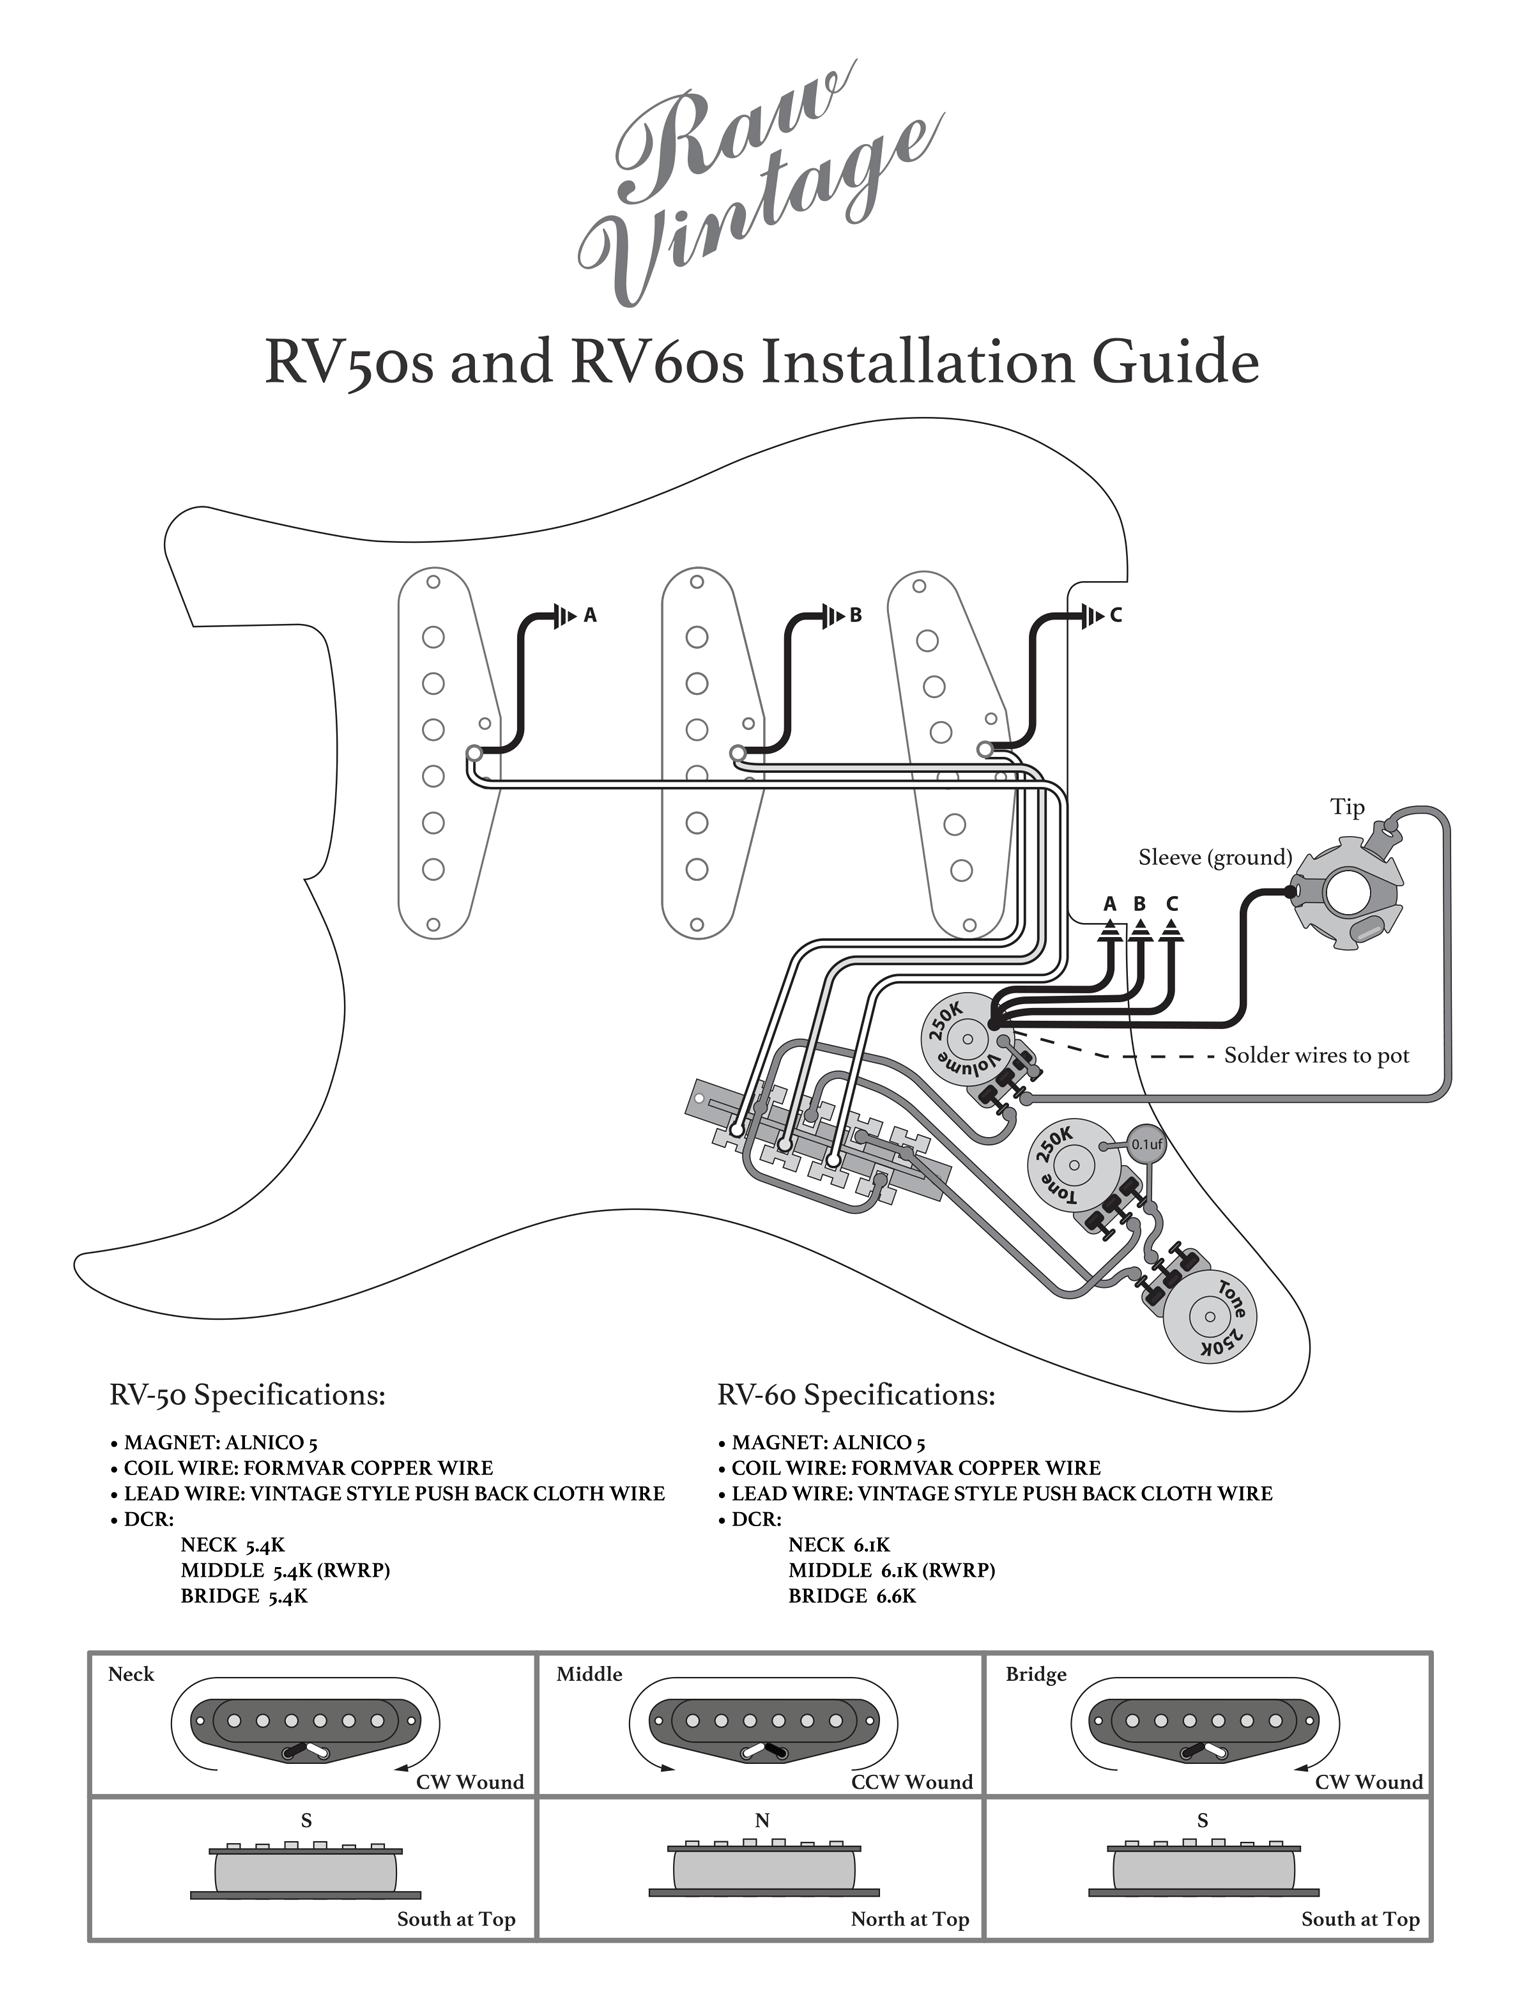 RV-50 and RV-60 Installation Guide